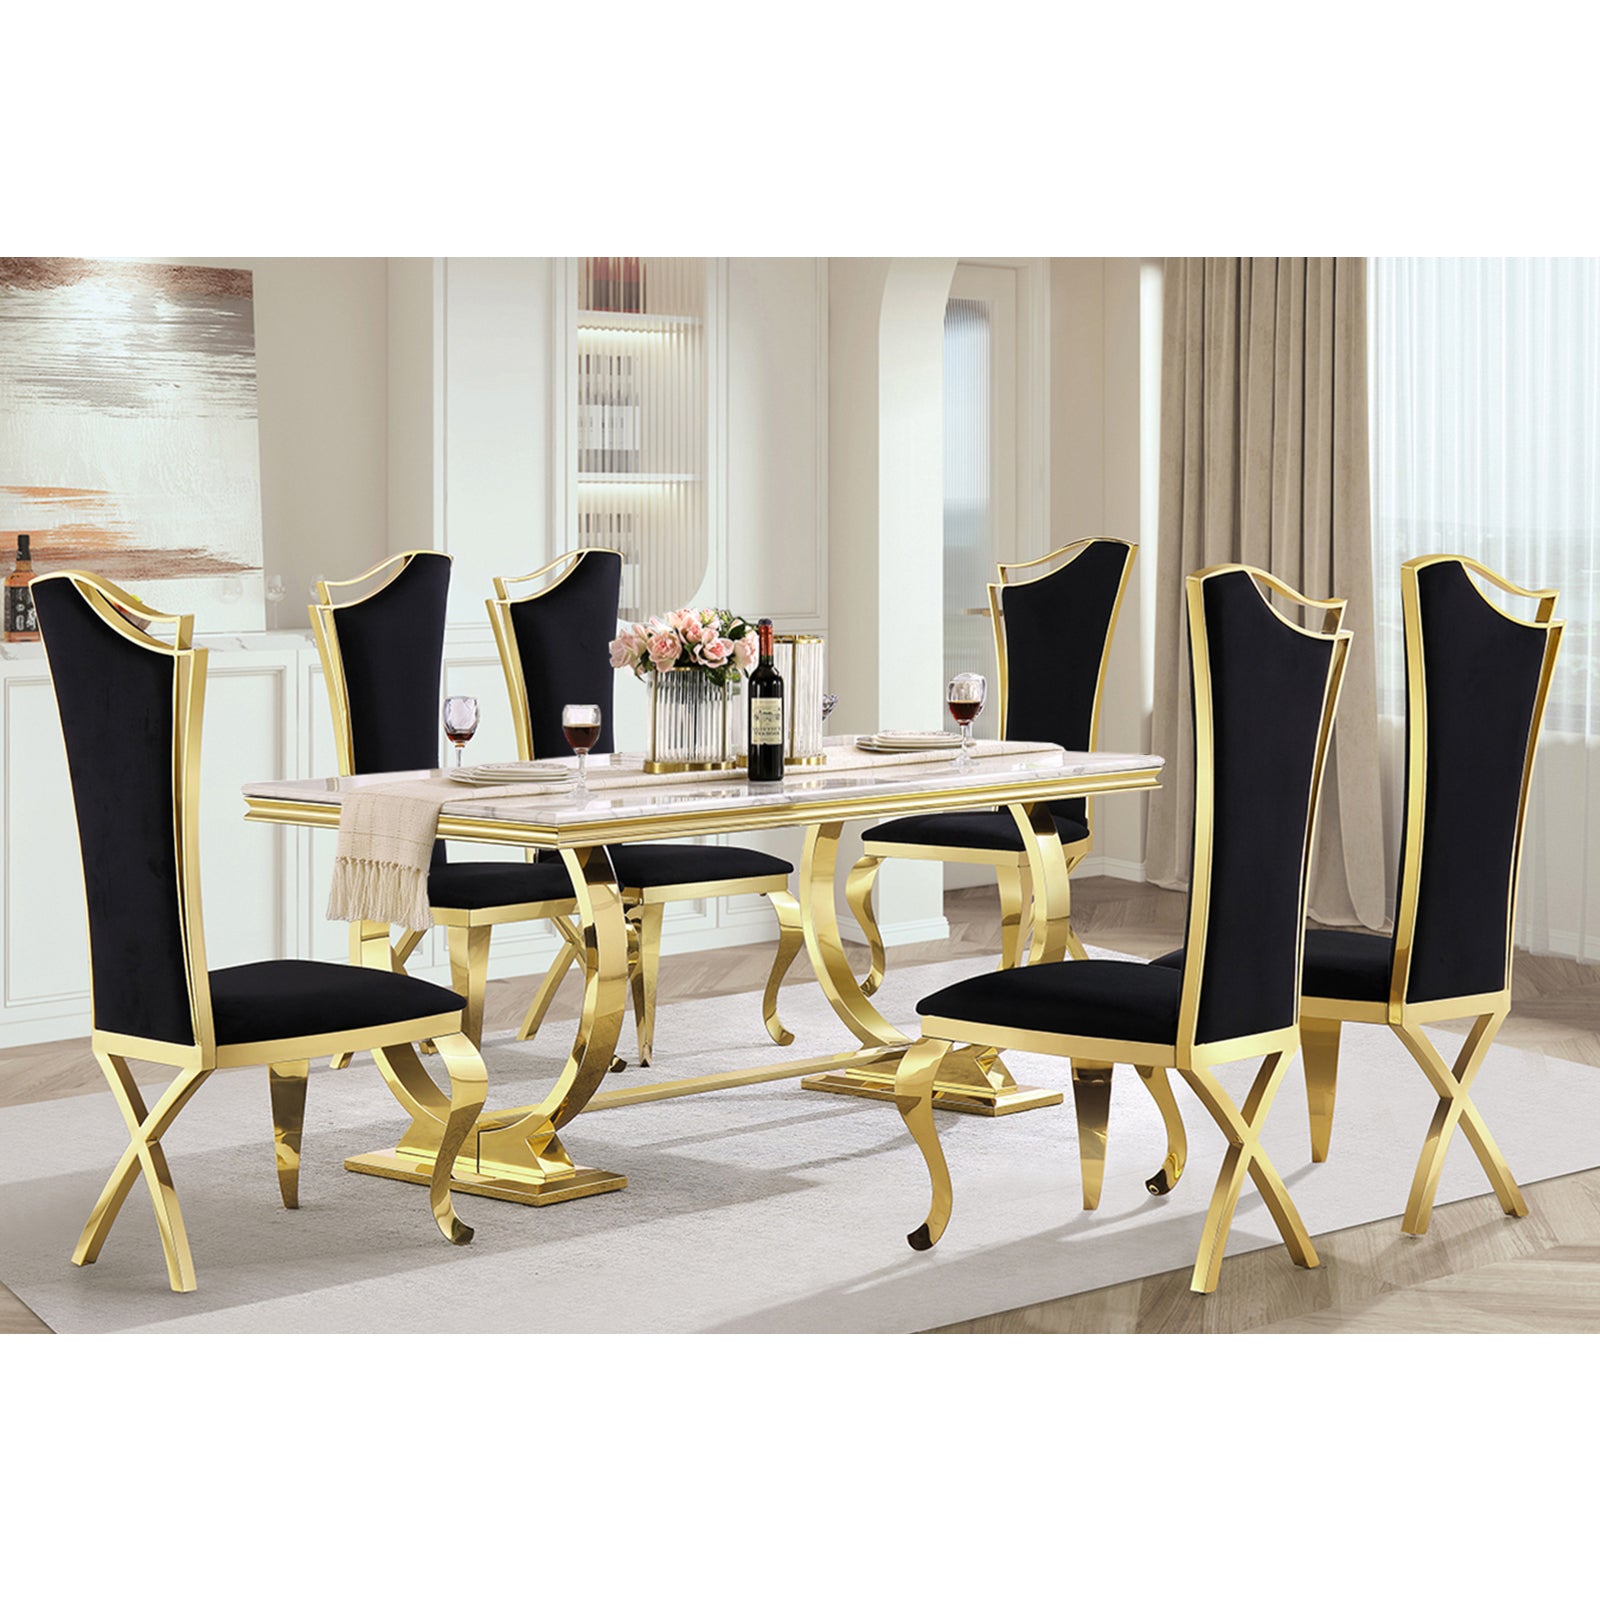 607-Set | AUZ Black and Gold Dining room Sets for 6